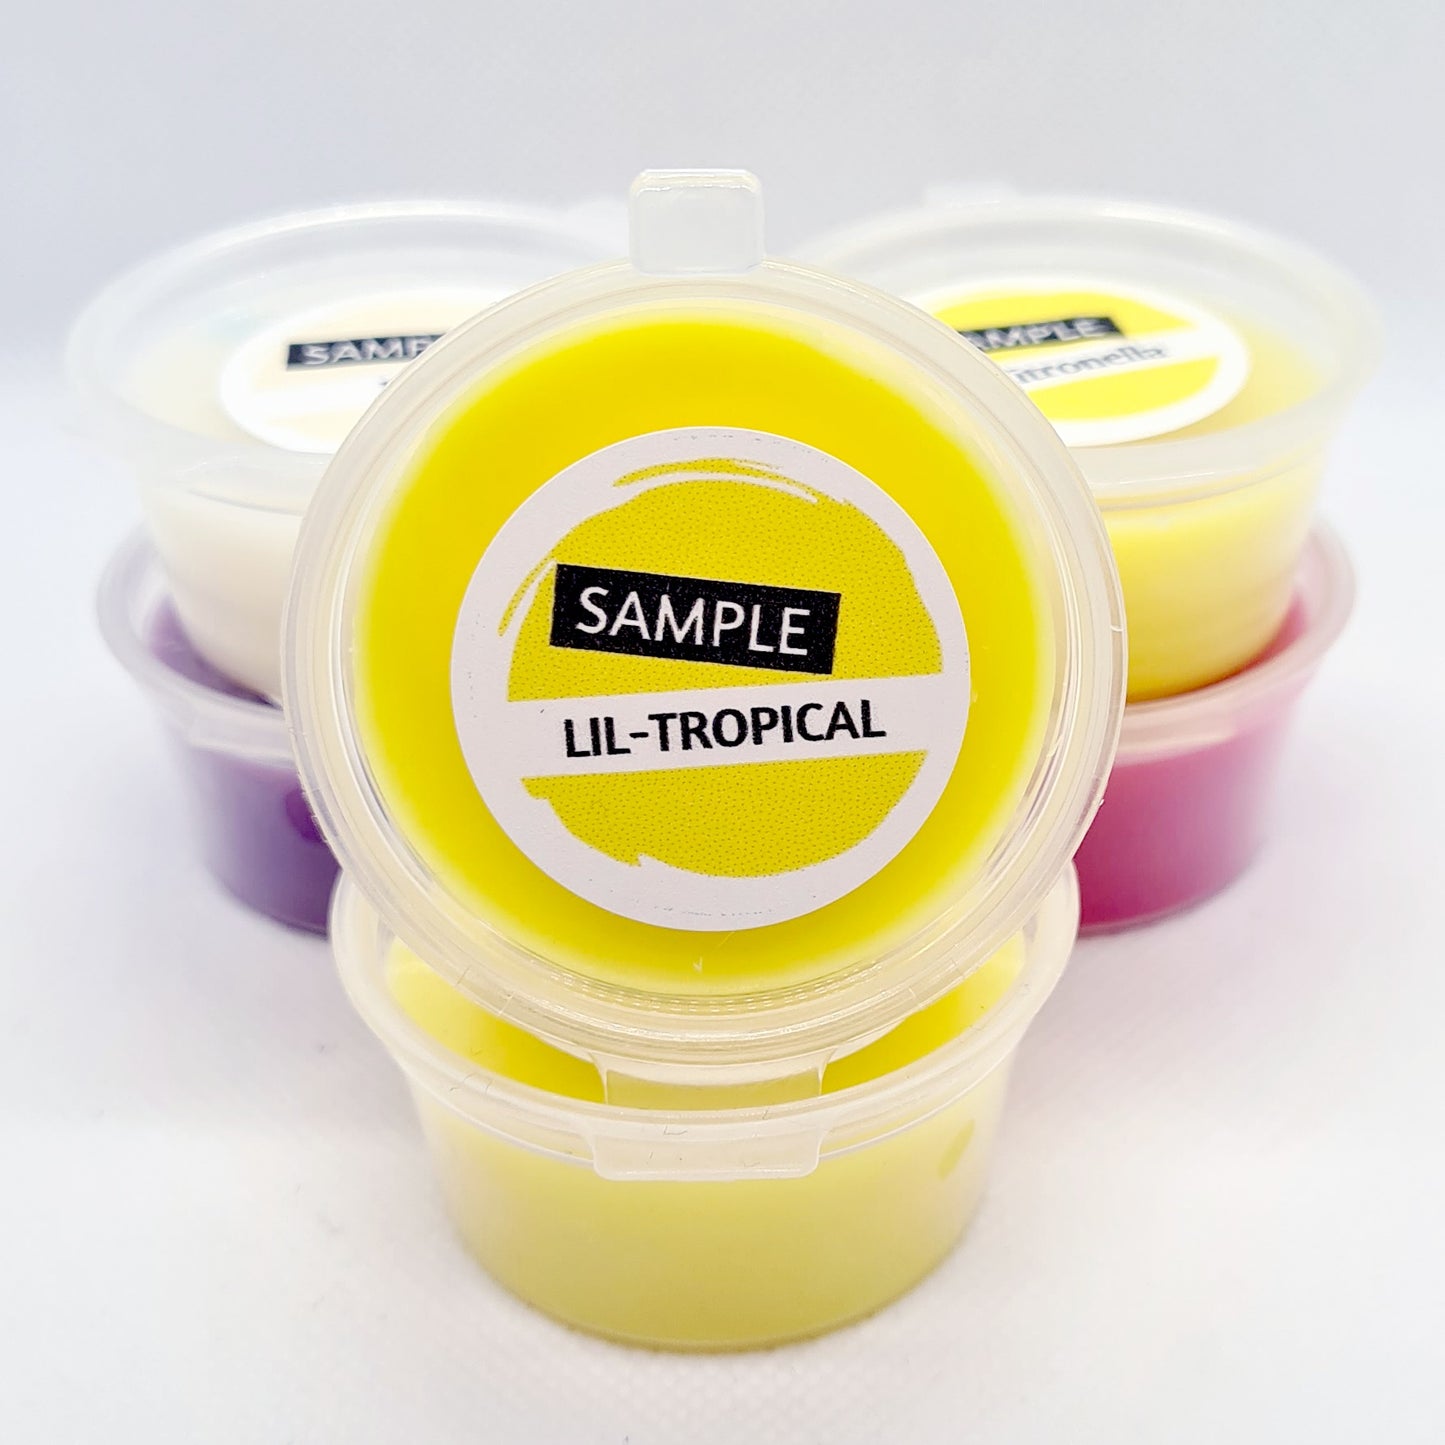 Lil-Tropical Wax Melt Sample Pot